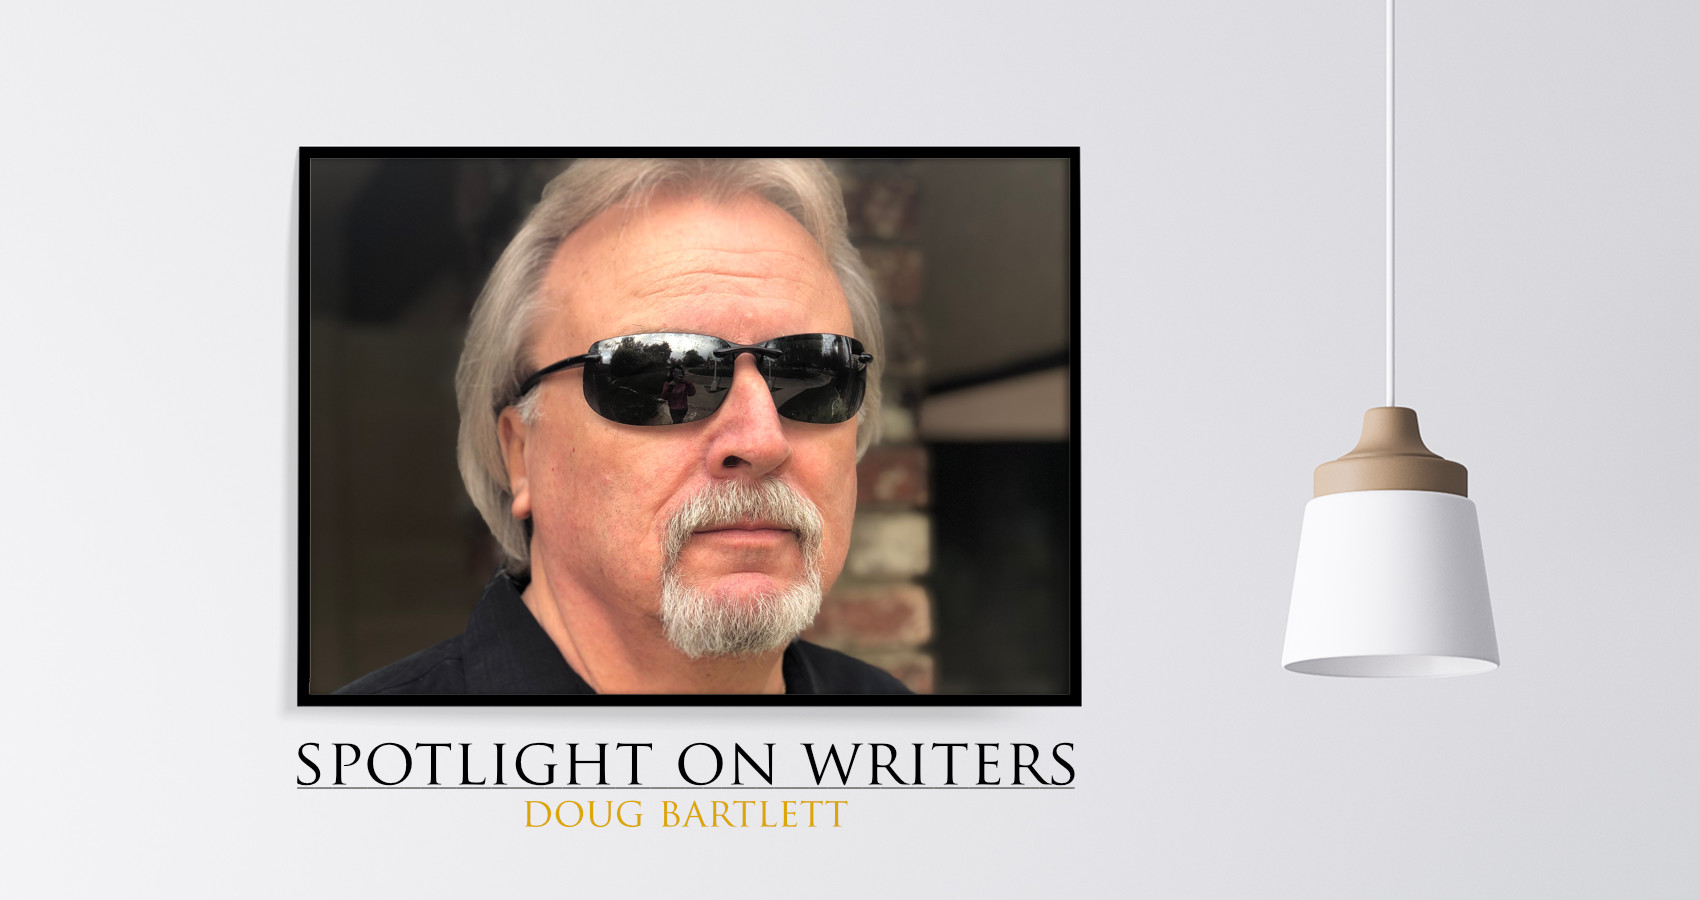 Spotlight On Writers - Doug Bartlett, interview at Spillwords.com